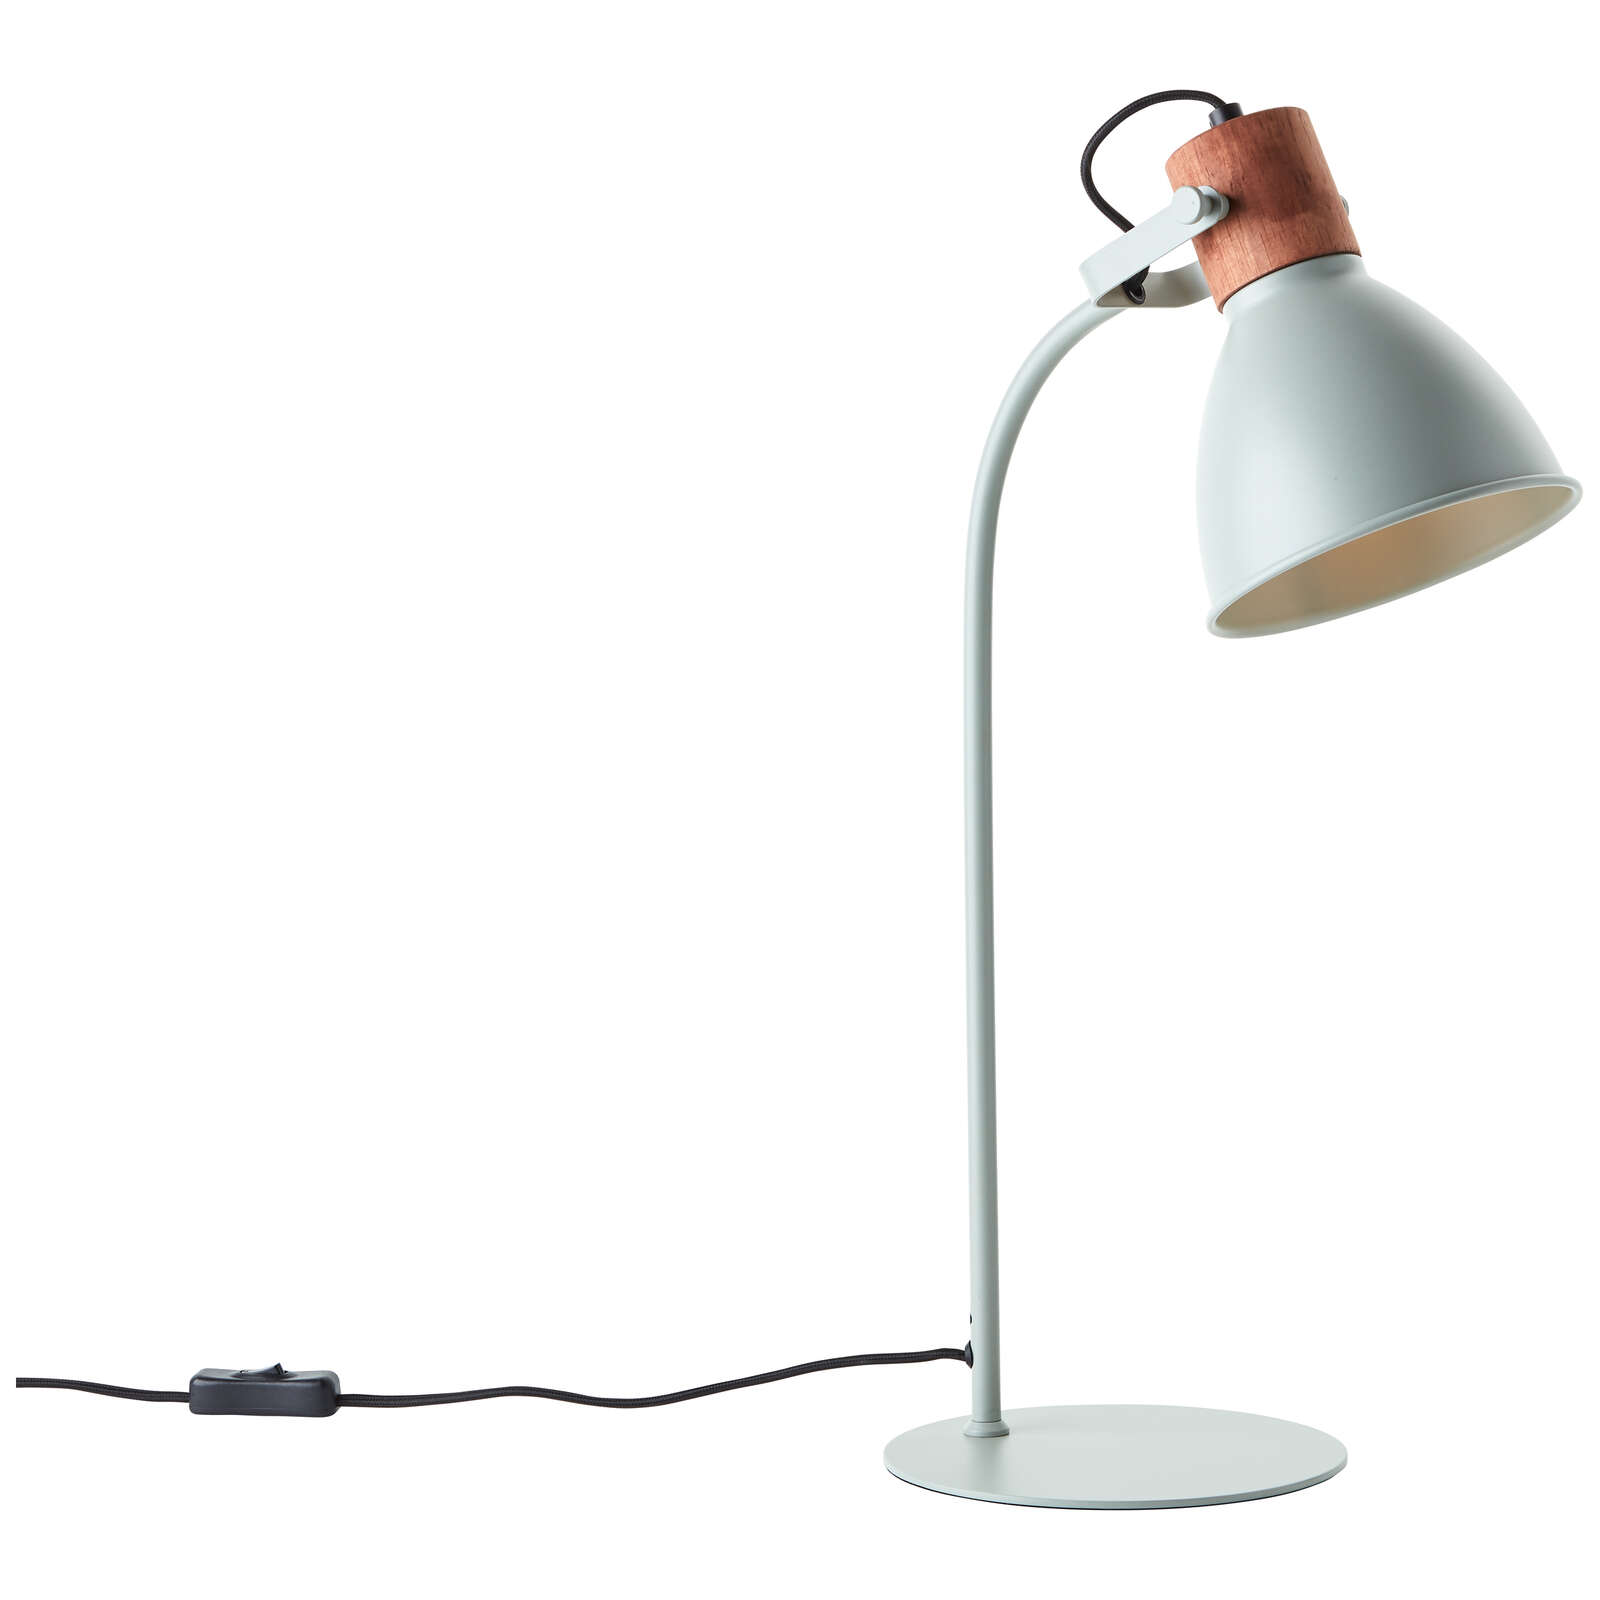             Houten tafellamp - Franziska 4 - Groen
        